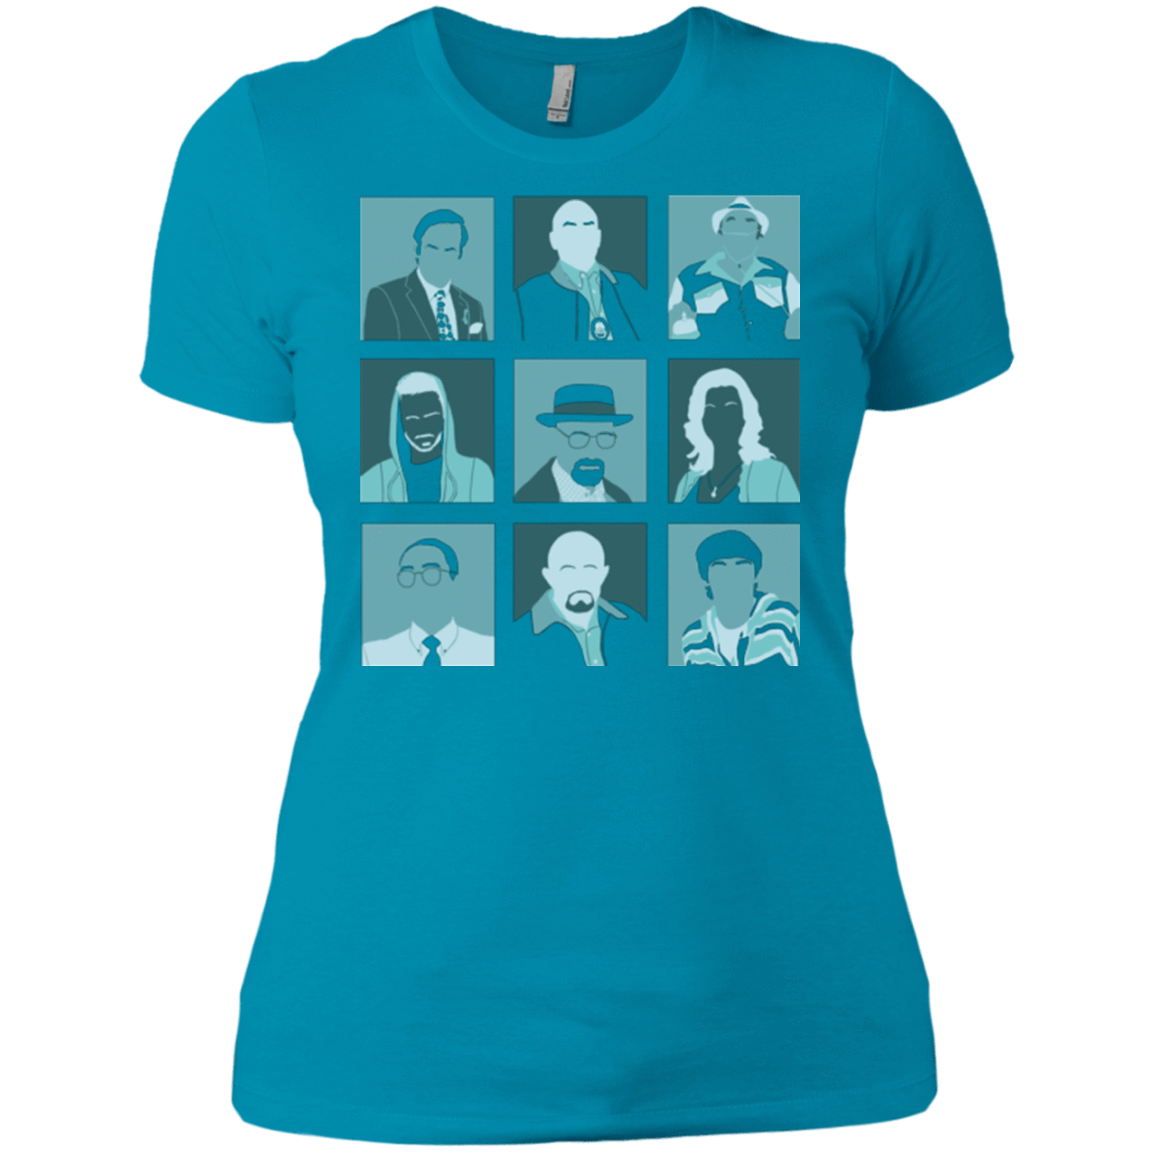 T-Shirts Turquoise / X-Small Breaking Pop Women's Premium T-Shirt